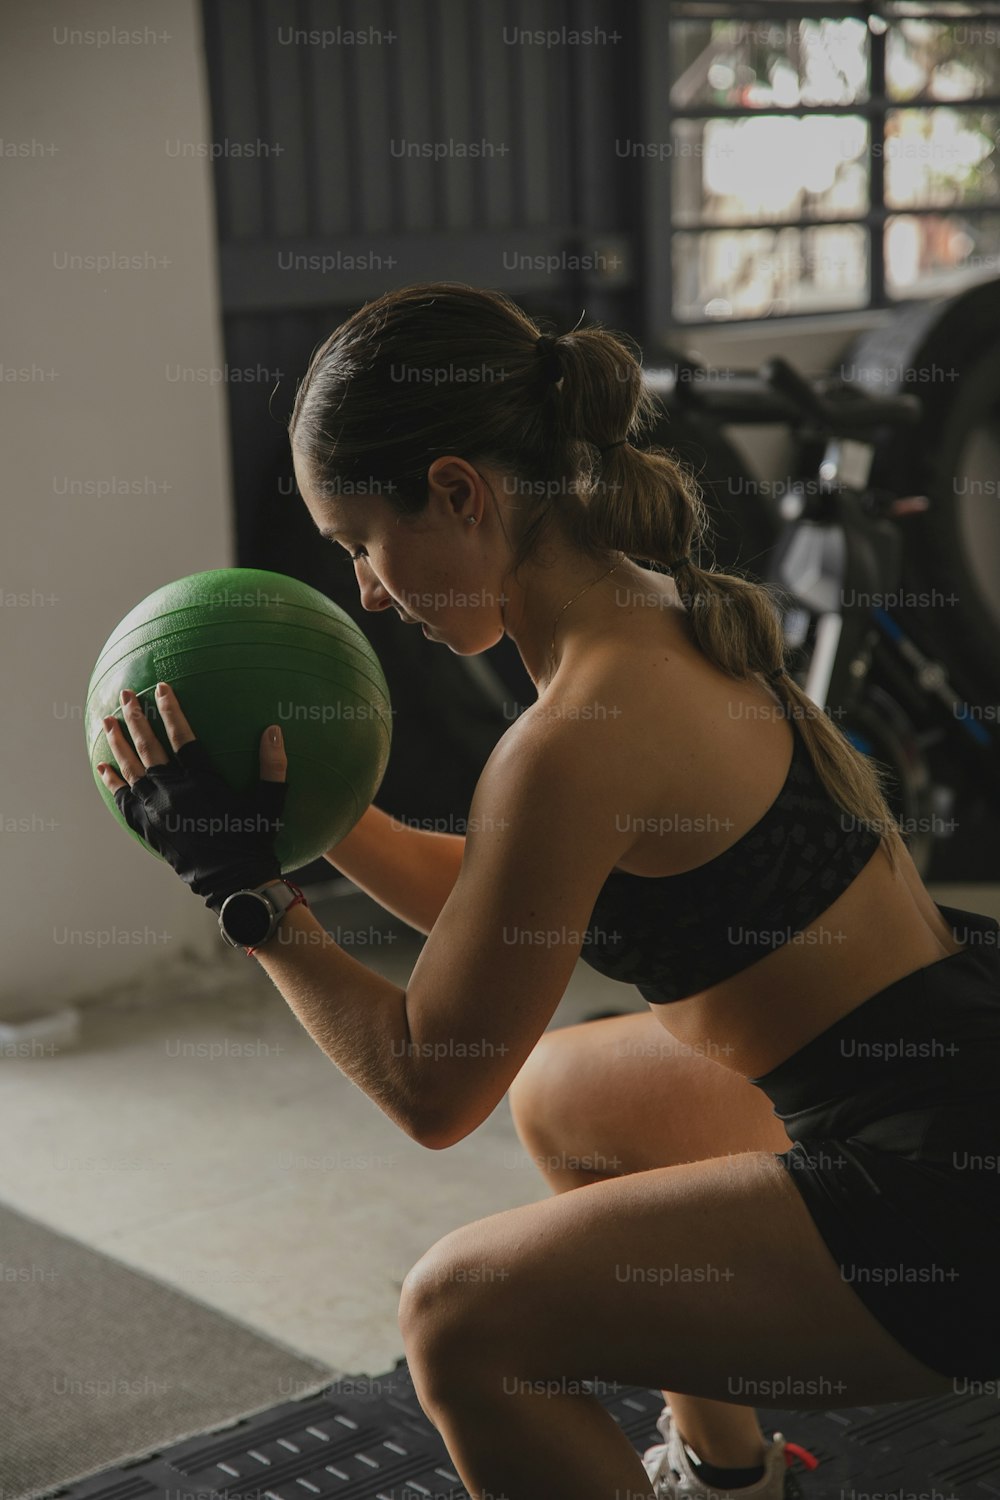 a woman squatting down holding a green ball